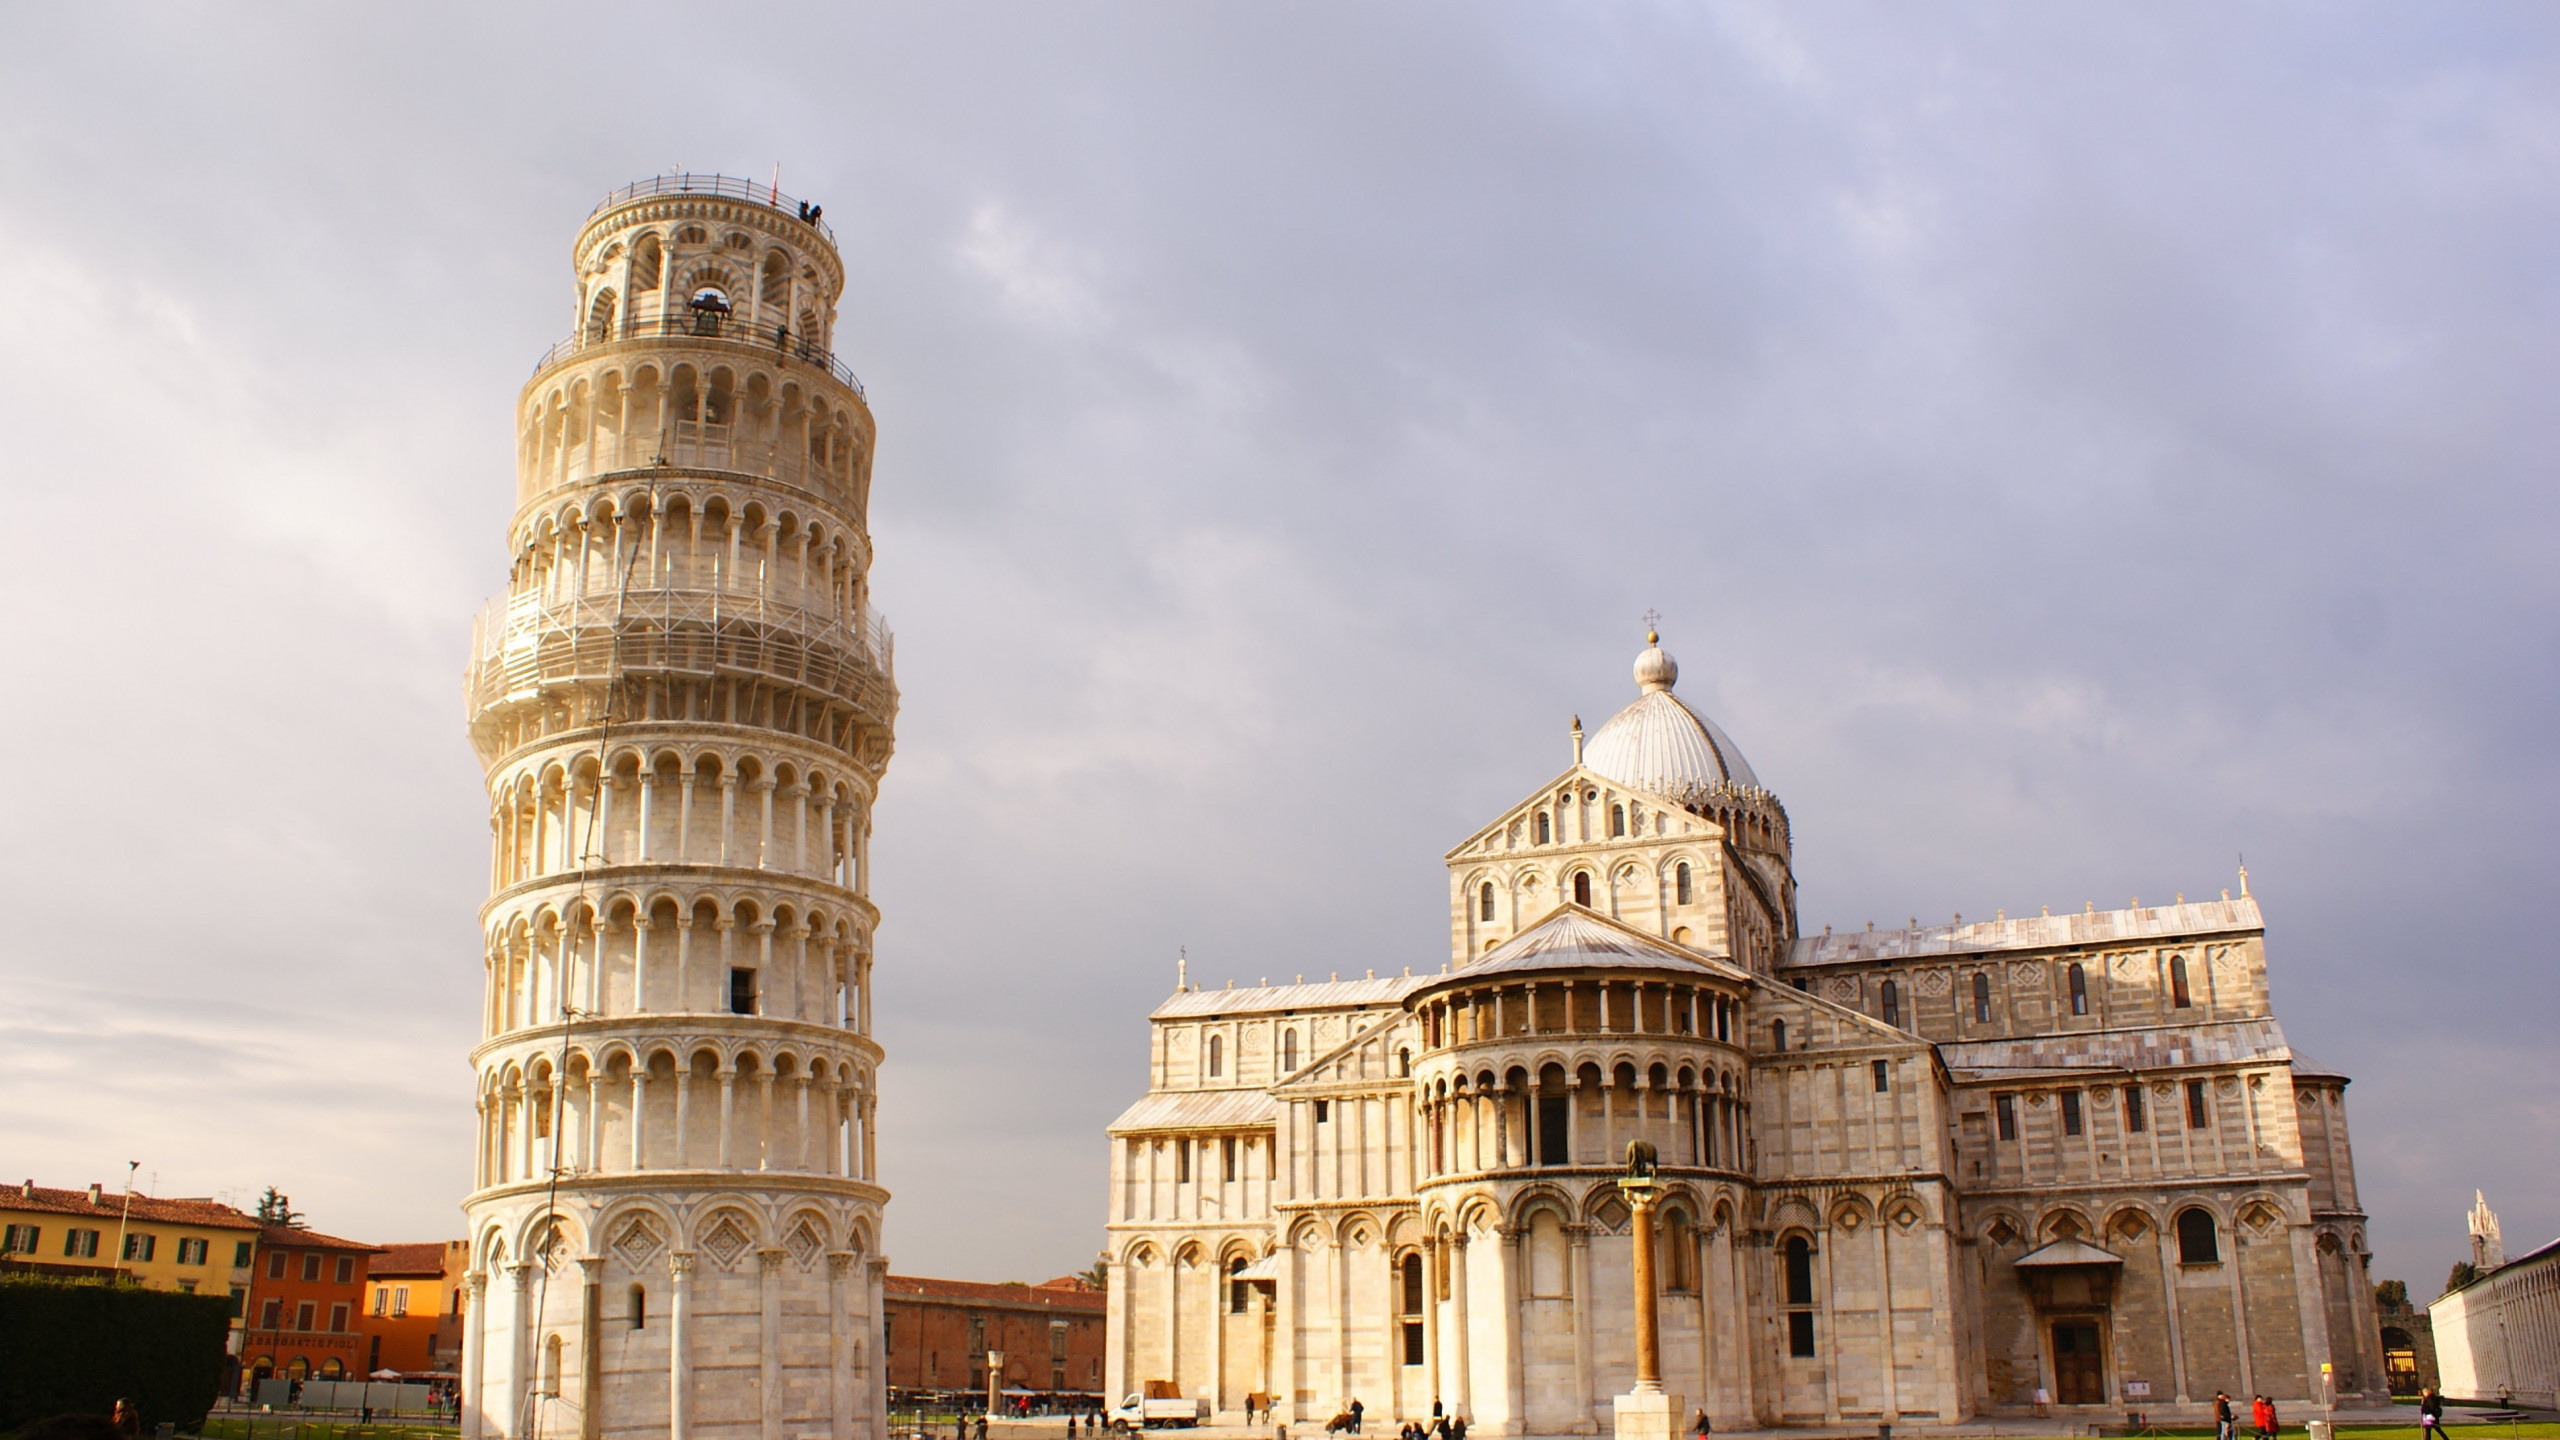 Leaning Tower of Pisa, Desktop wallpaper, Architectural beauty, Tower's grandeur, 2560x1440 HD Desktop